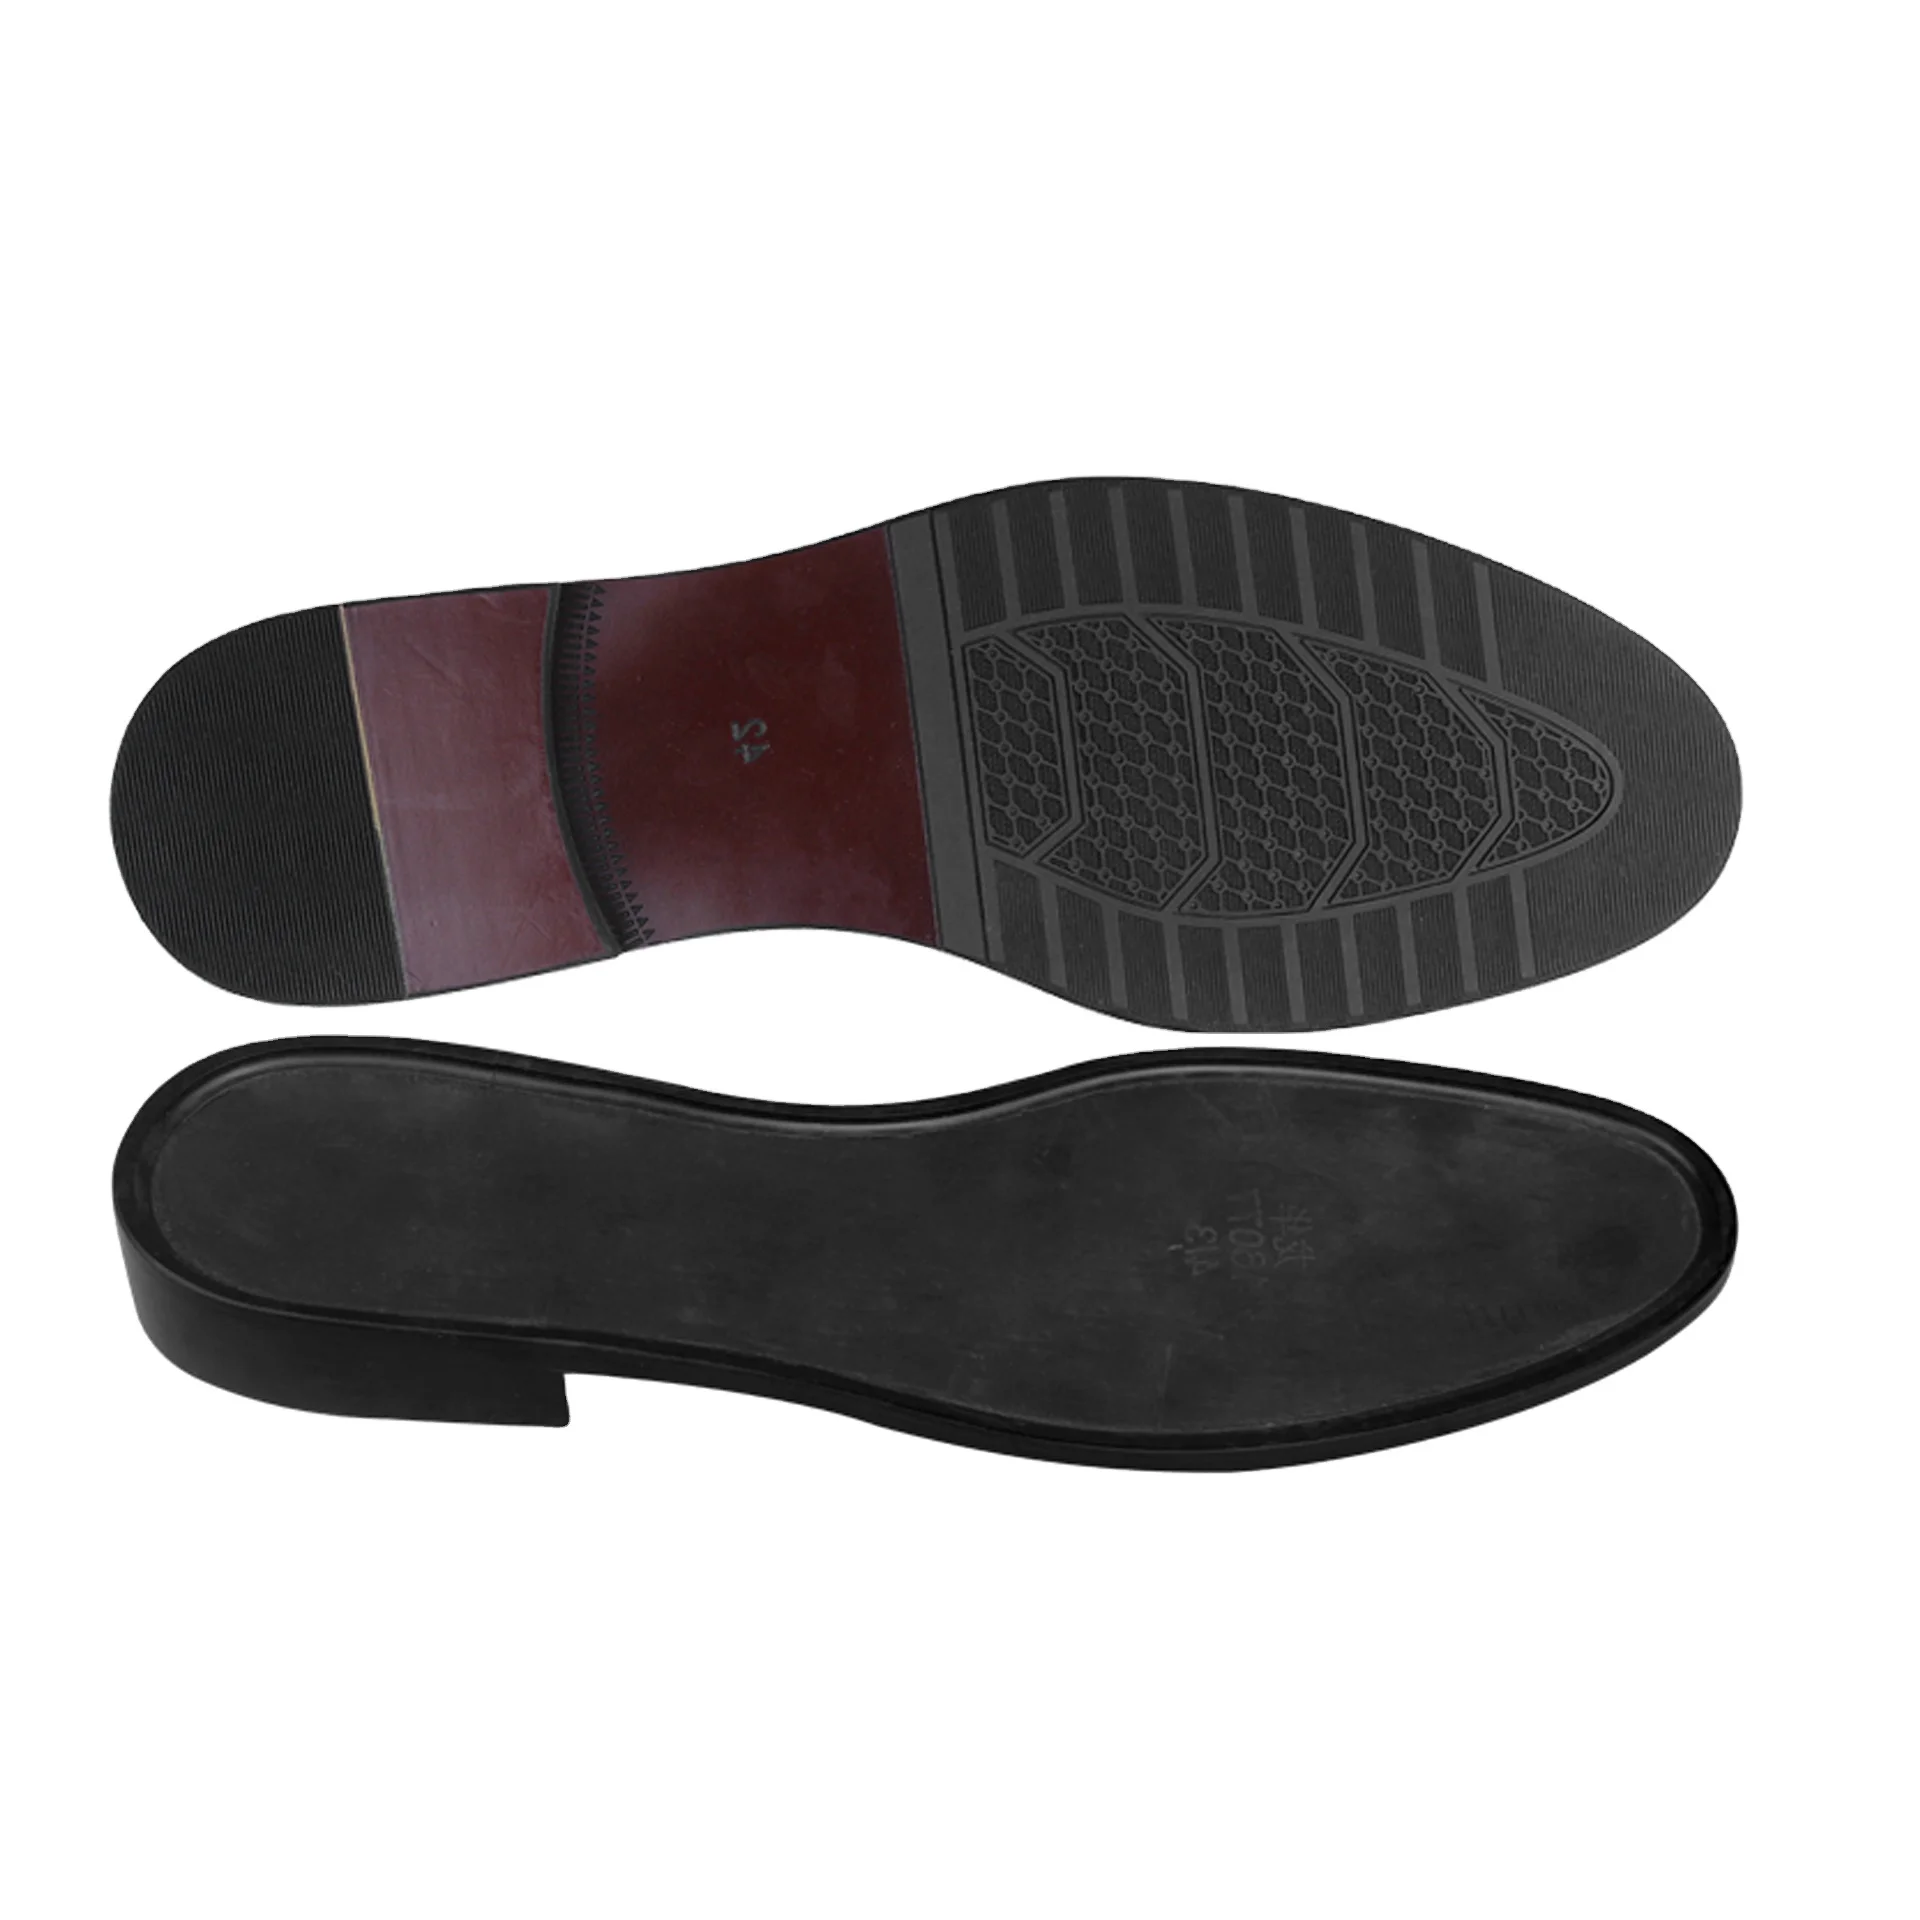 shoe sole rubber